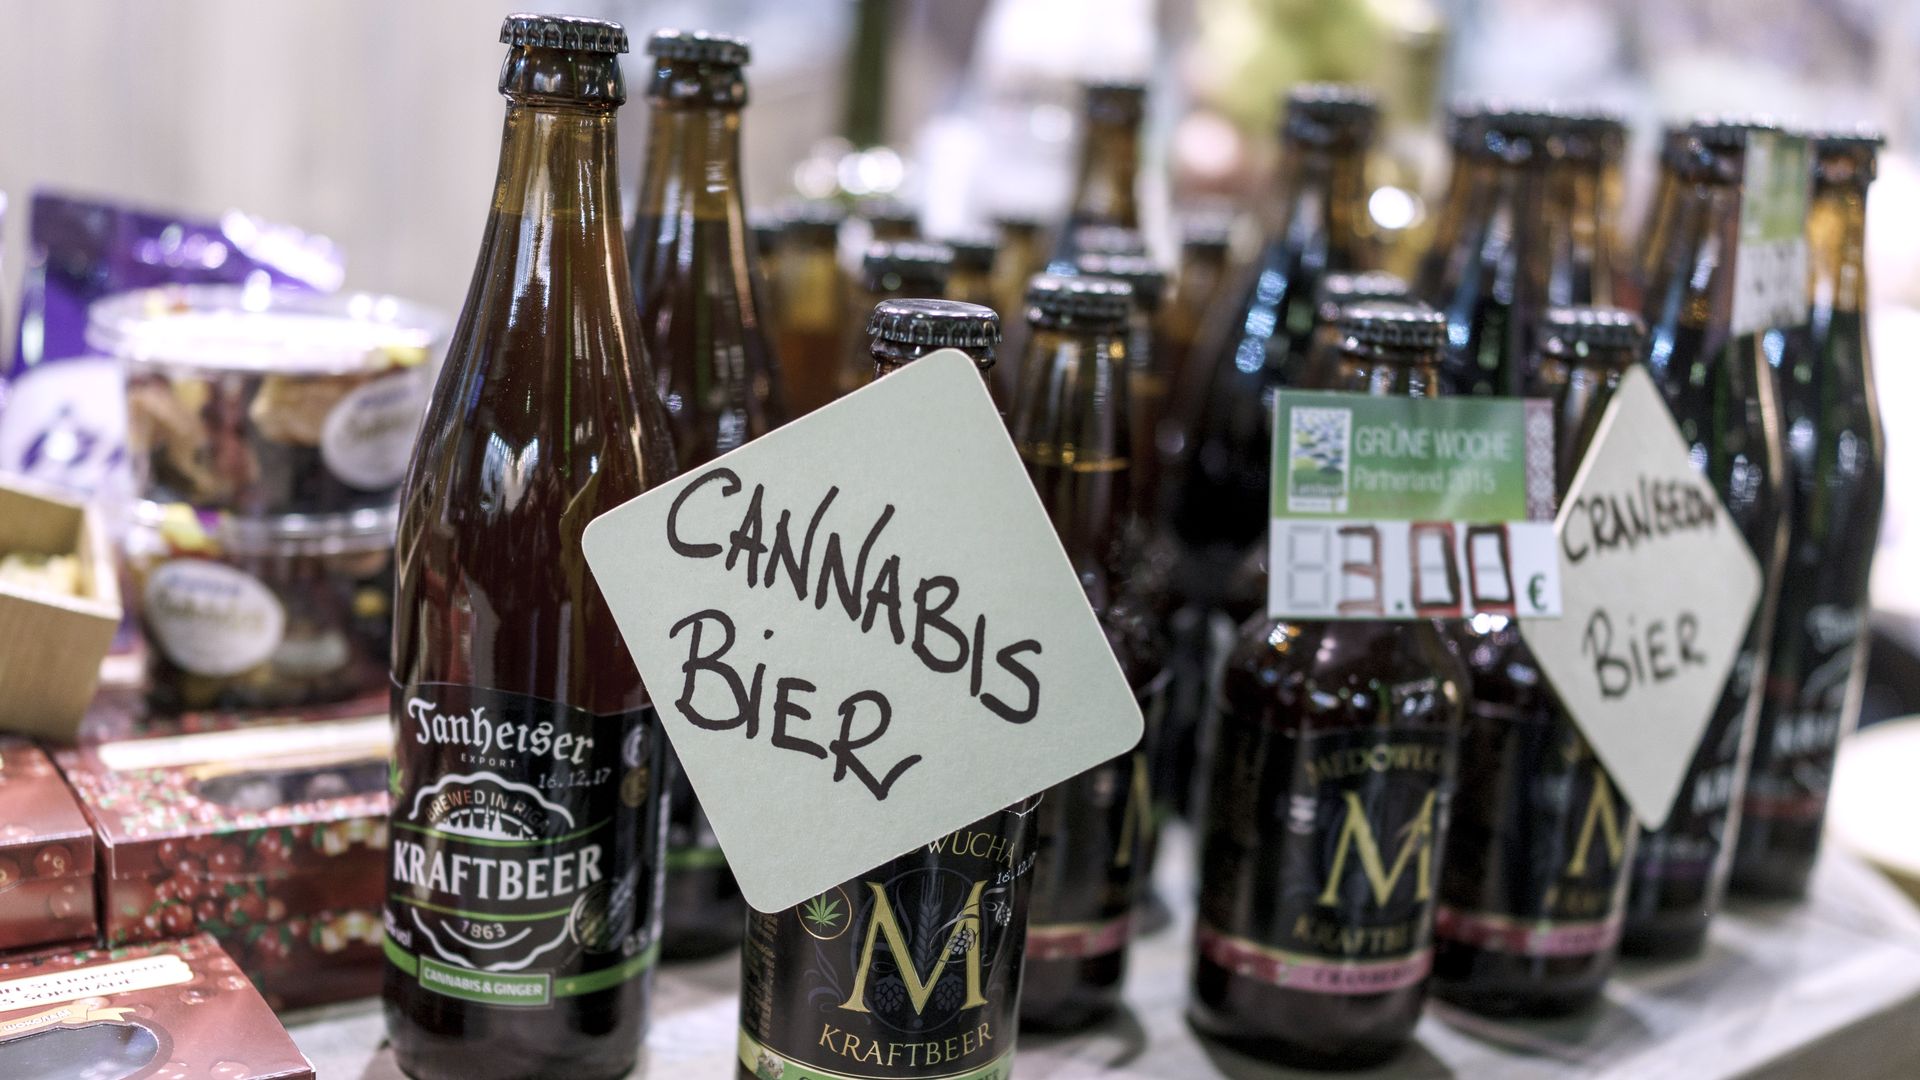 Cannabis beer bottles